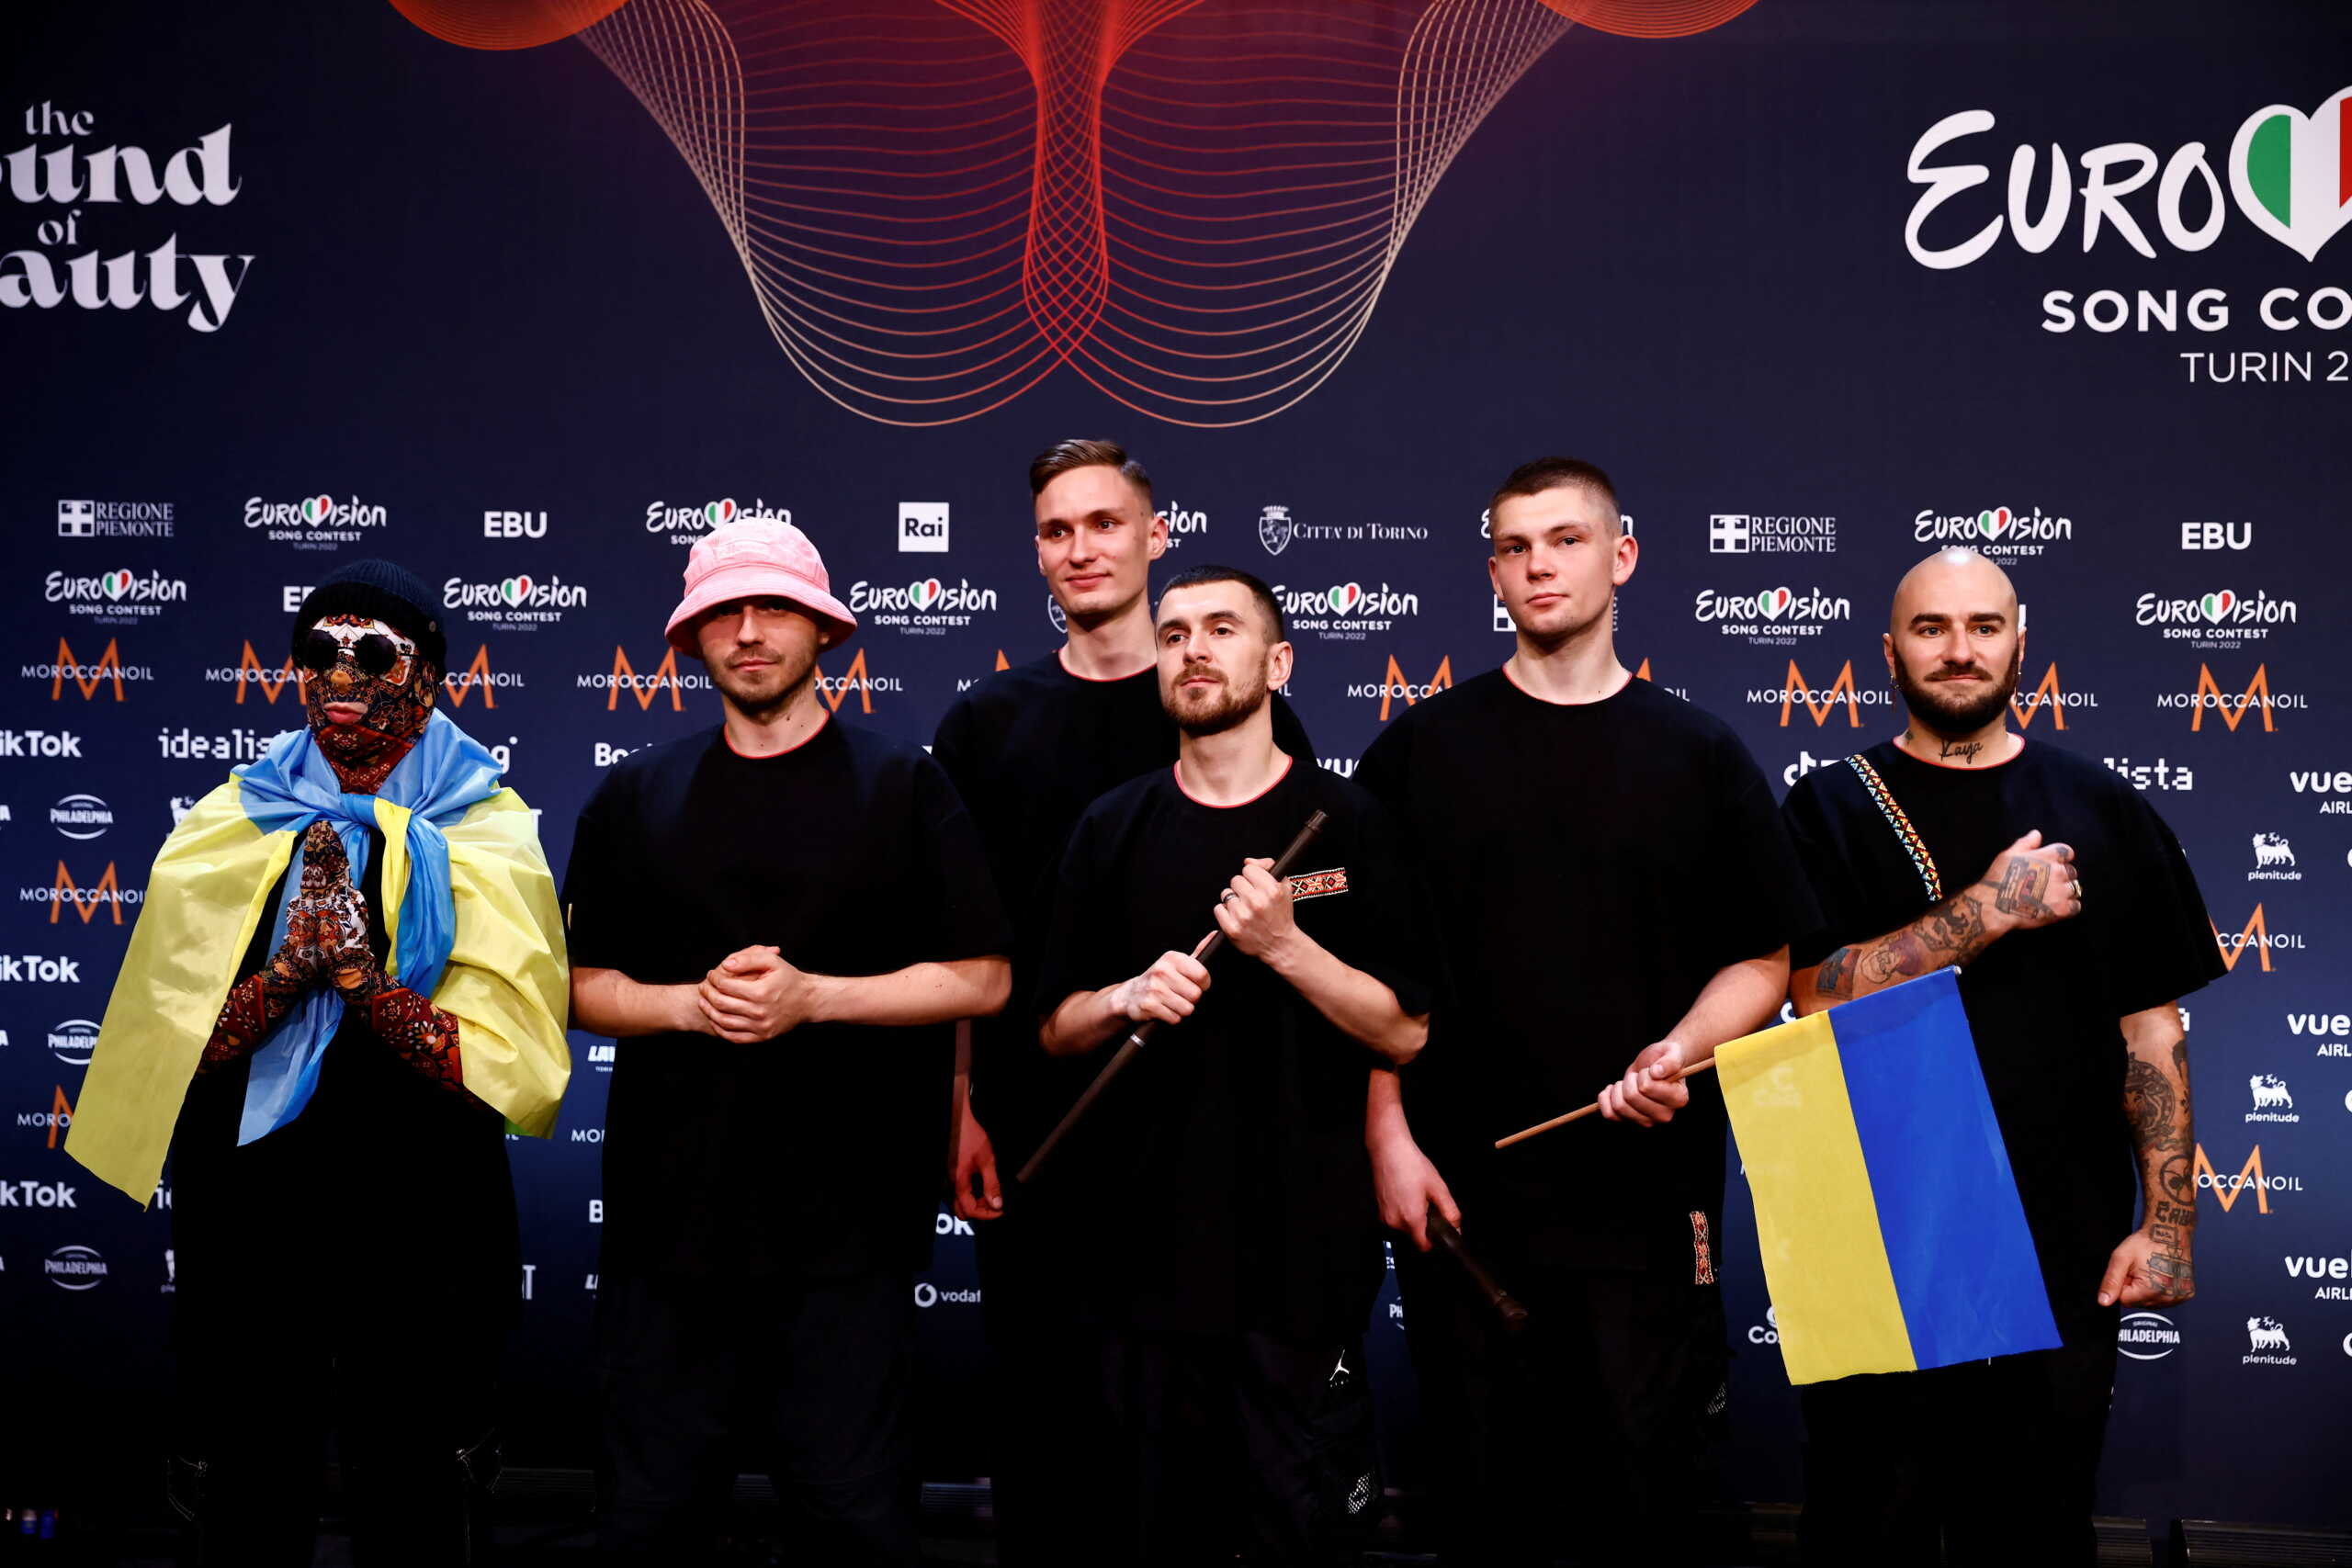 Eurovision 2022: Οι Kalush Orchestra ξεκινούν περιοδεία για να συγκεντρώσουν χρήματα για τις ουκρανικές δυνάμεις